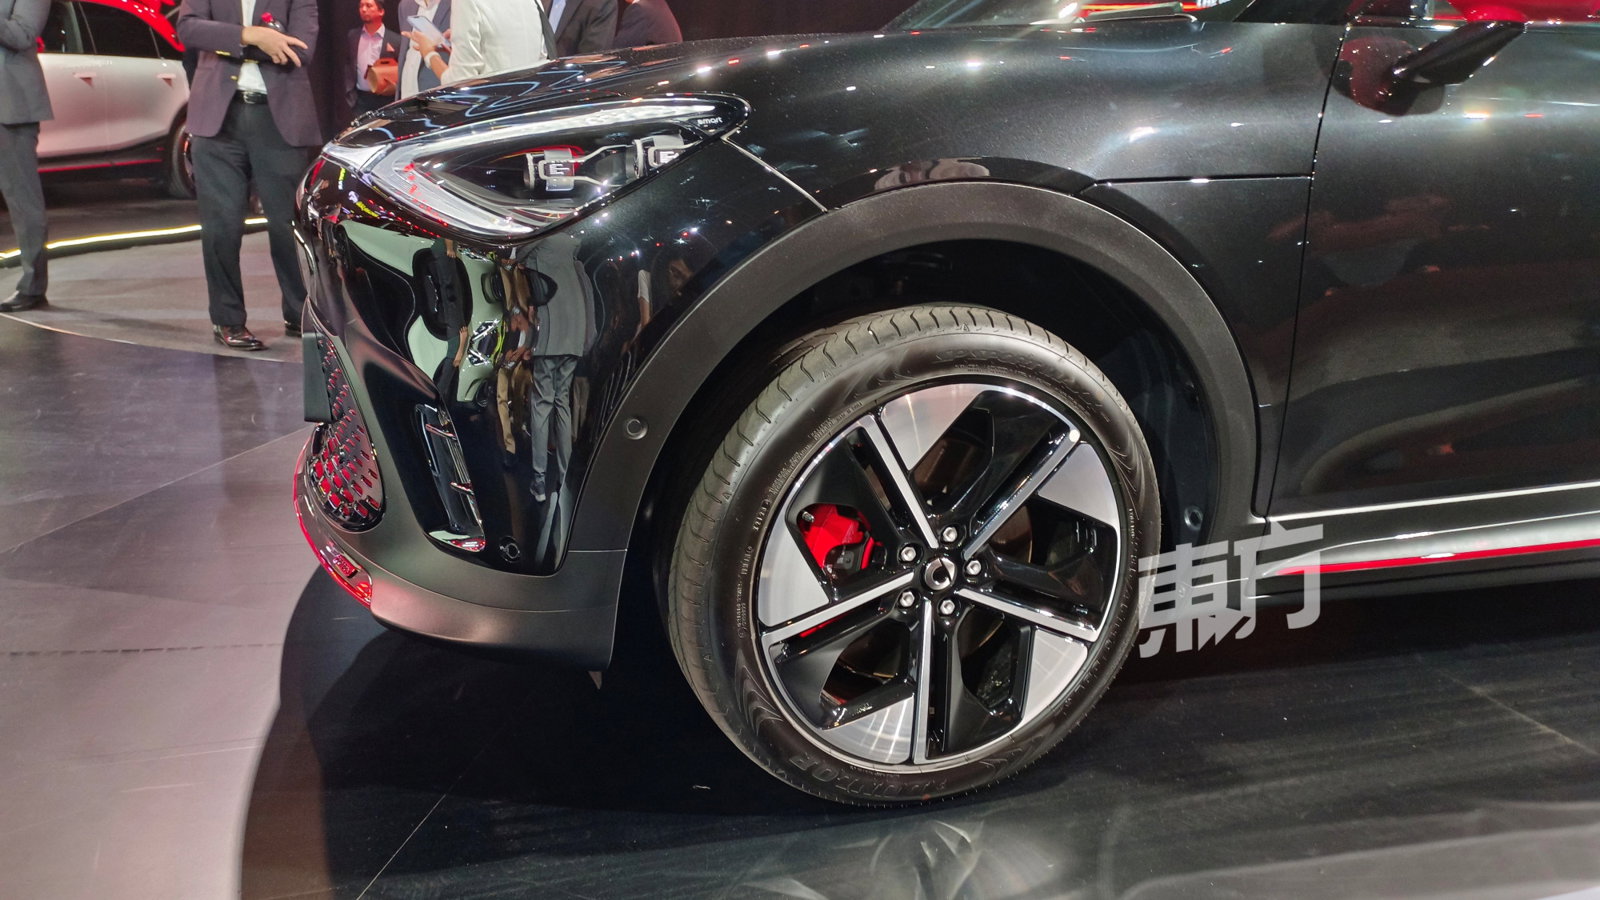 Brabus版本的轮胎设计更为运动化一些，凸显出顶配版本的高性能格调。